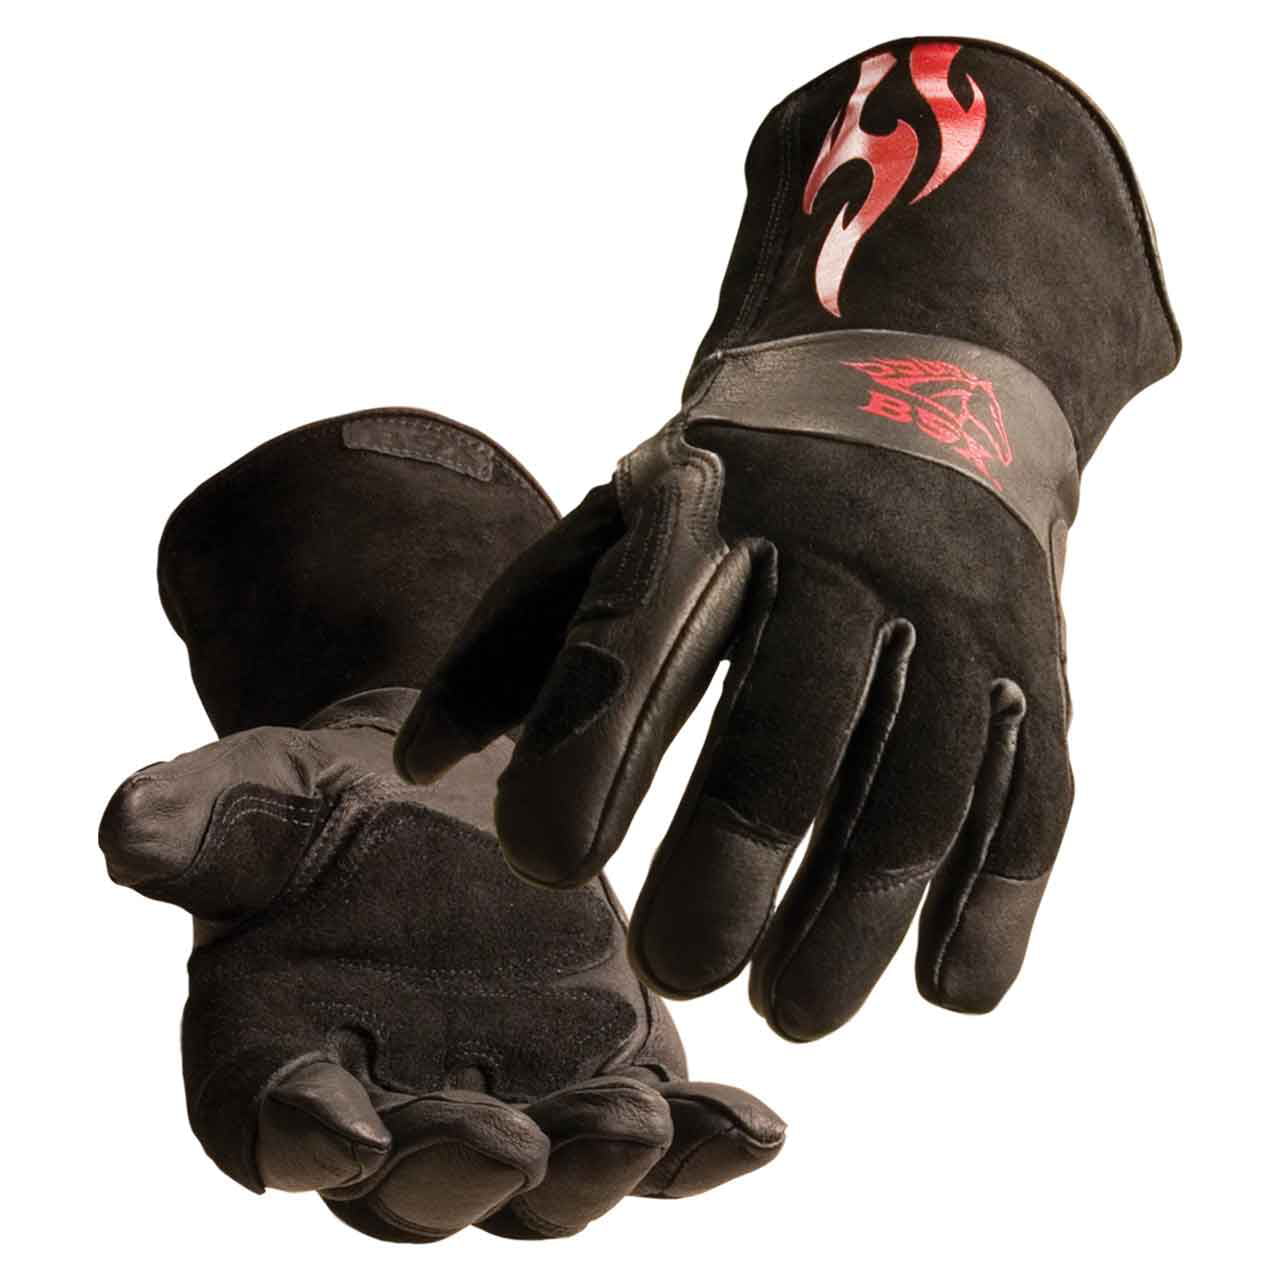 Black Stallion BS50 BSX Advanced Fit Stick Glove Black w/ Red Flames Large 